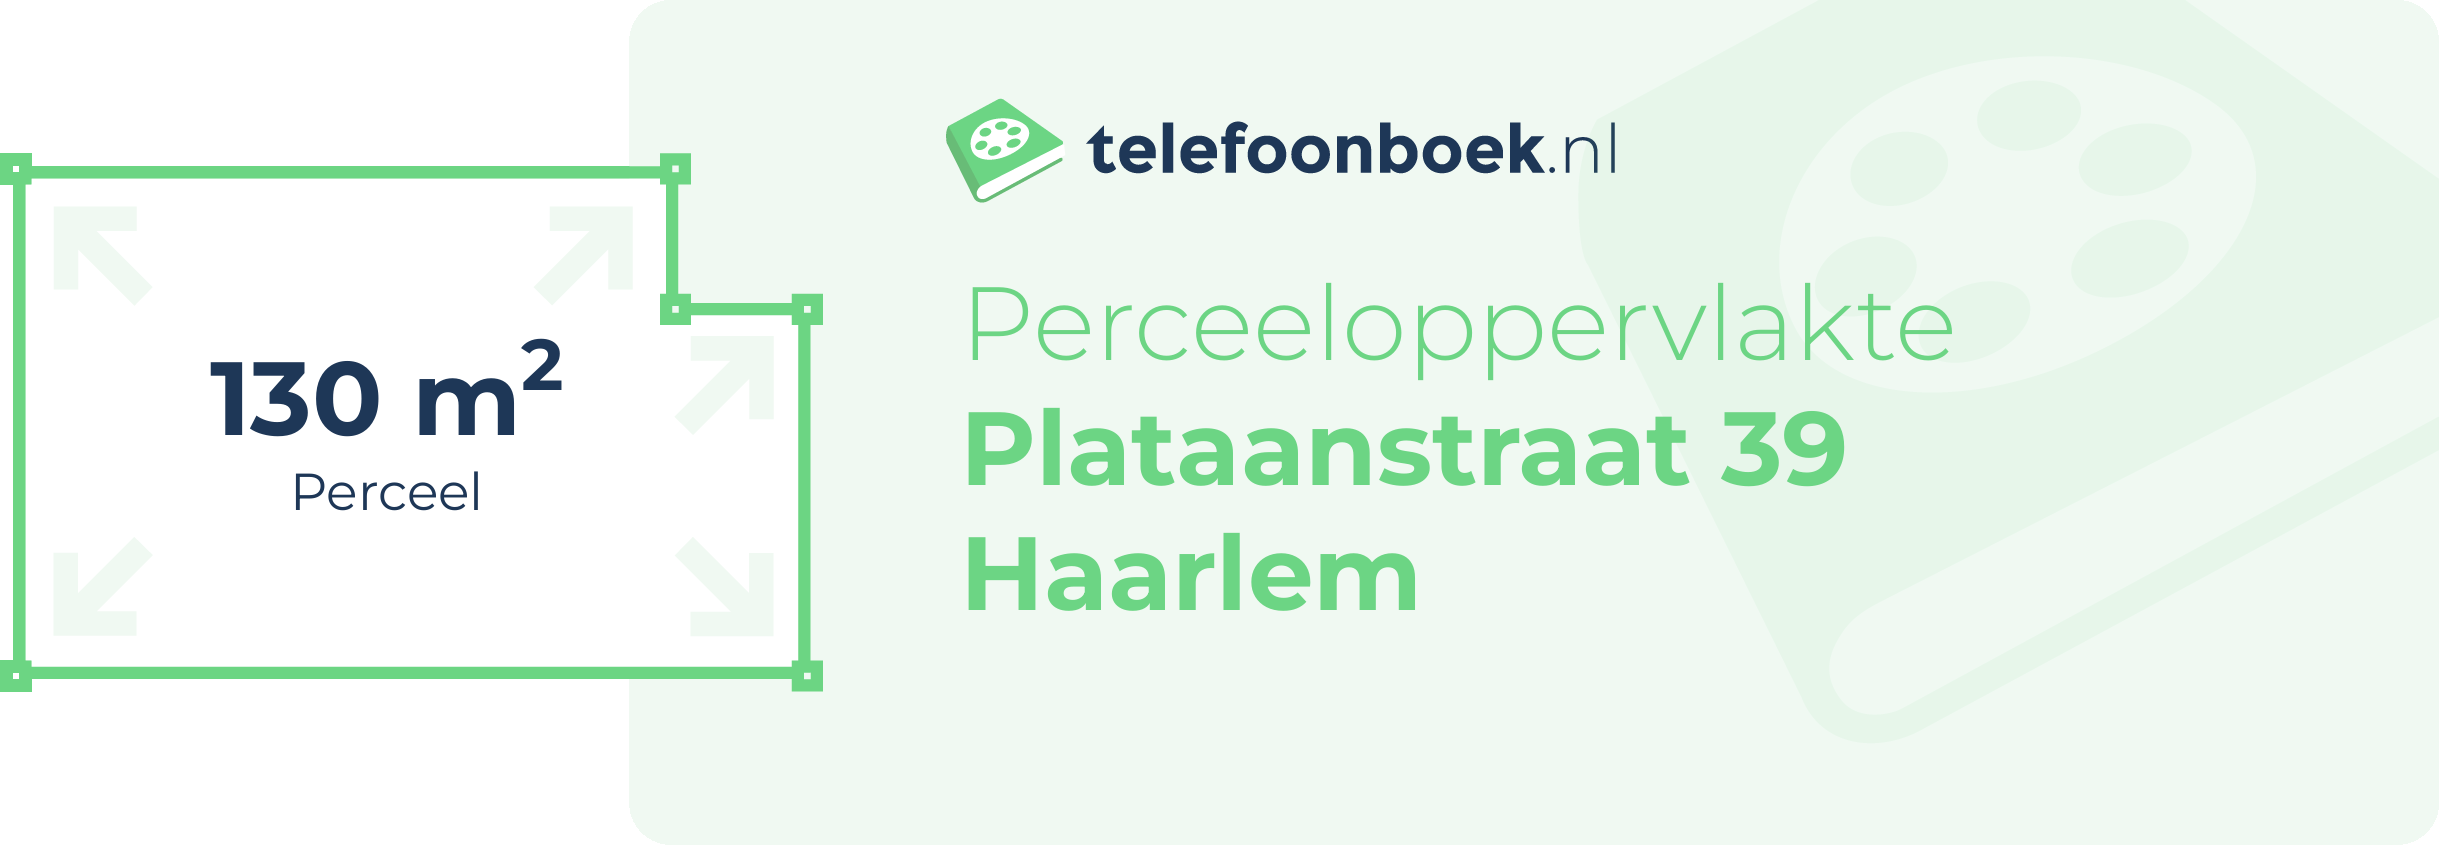 Perceeloppervlakte Plataanstraat 39 Haarlem